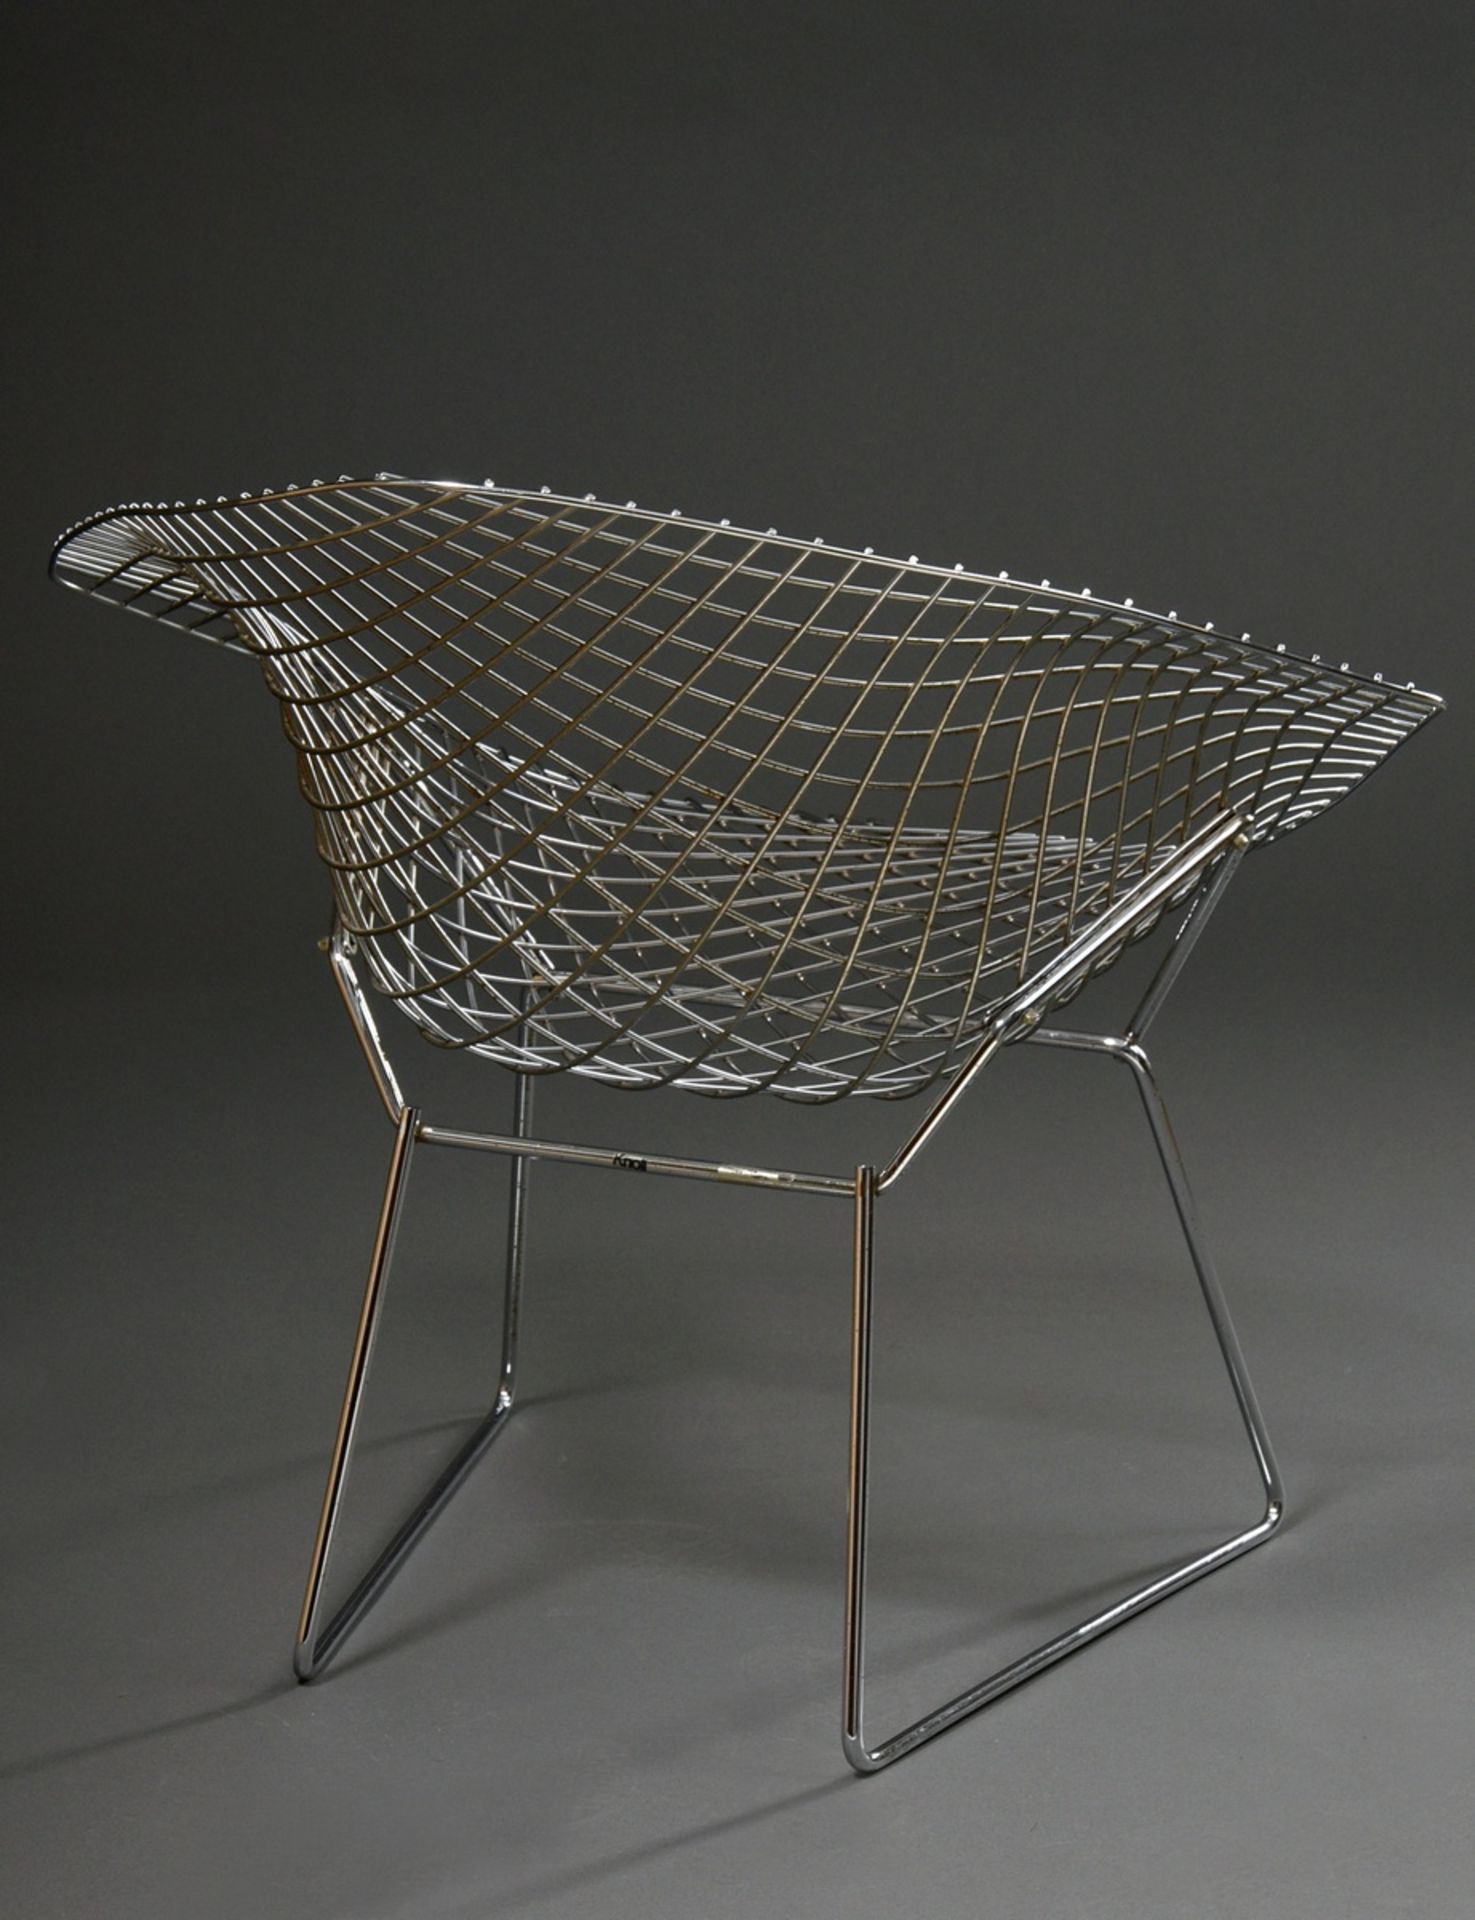 2 armchair "Diamond Chair", design: Harry Bertoia 1952 for Knoll International, chromed steel wire  - Image 4 of 7